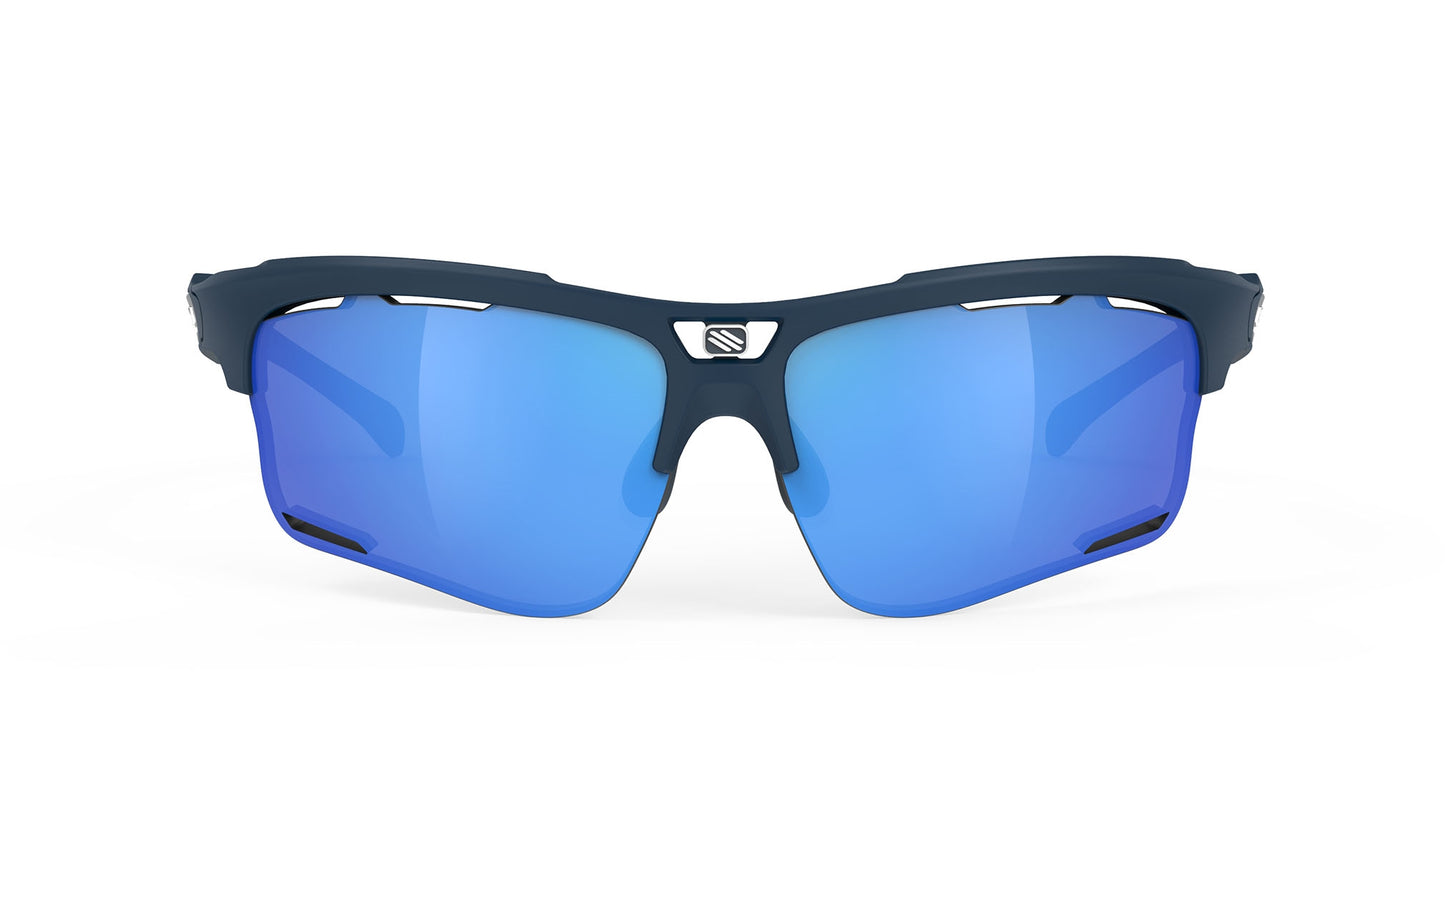 Rudy Project Keyblade Blue Navy Matte - Pol. 3Fx Hdr Multilaser Blue Sunglasses